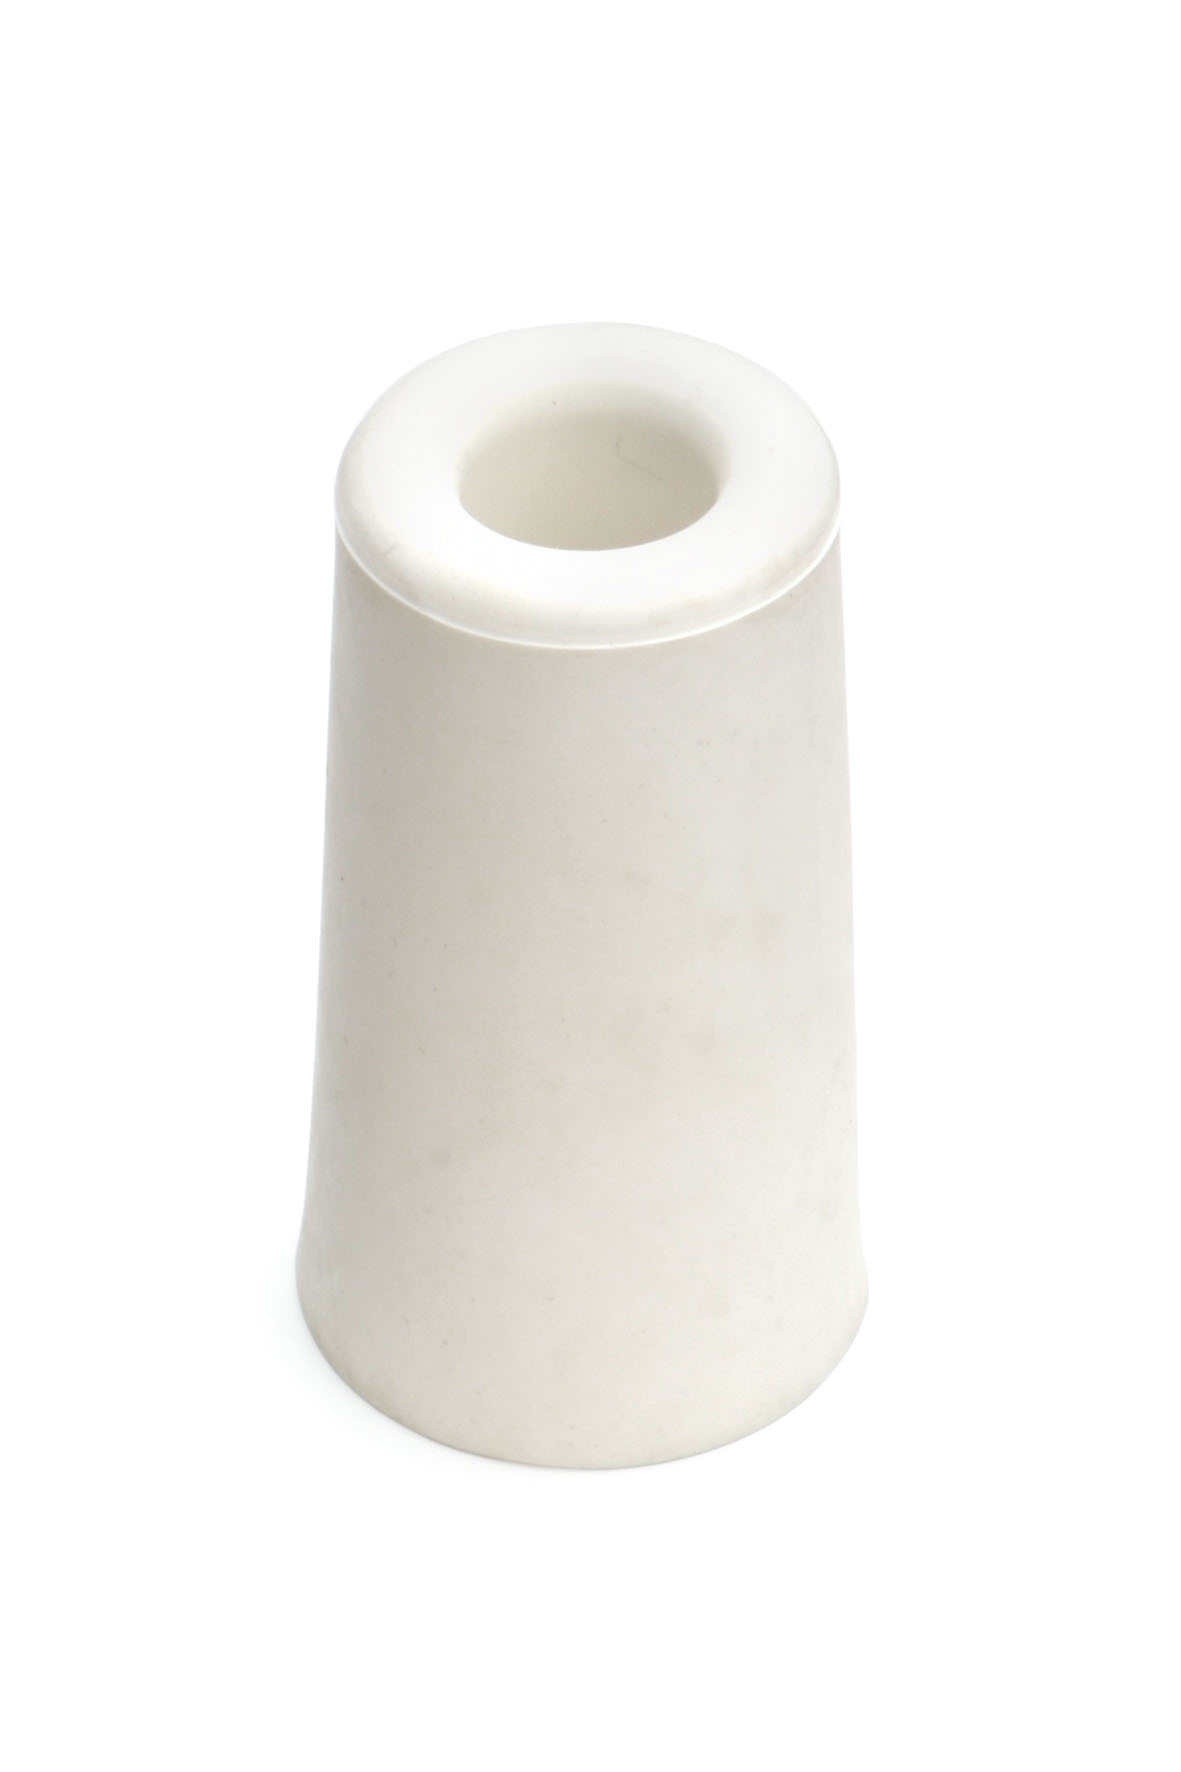 Deurstopper rubber wit 31x33 mm.jpg